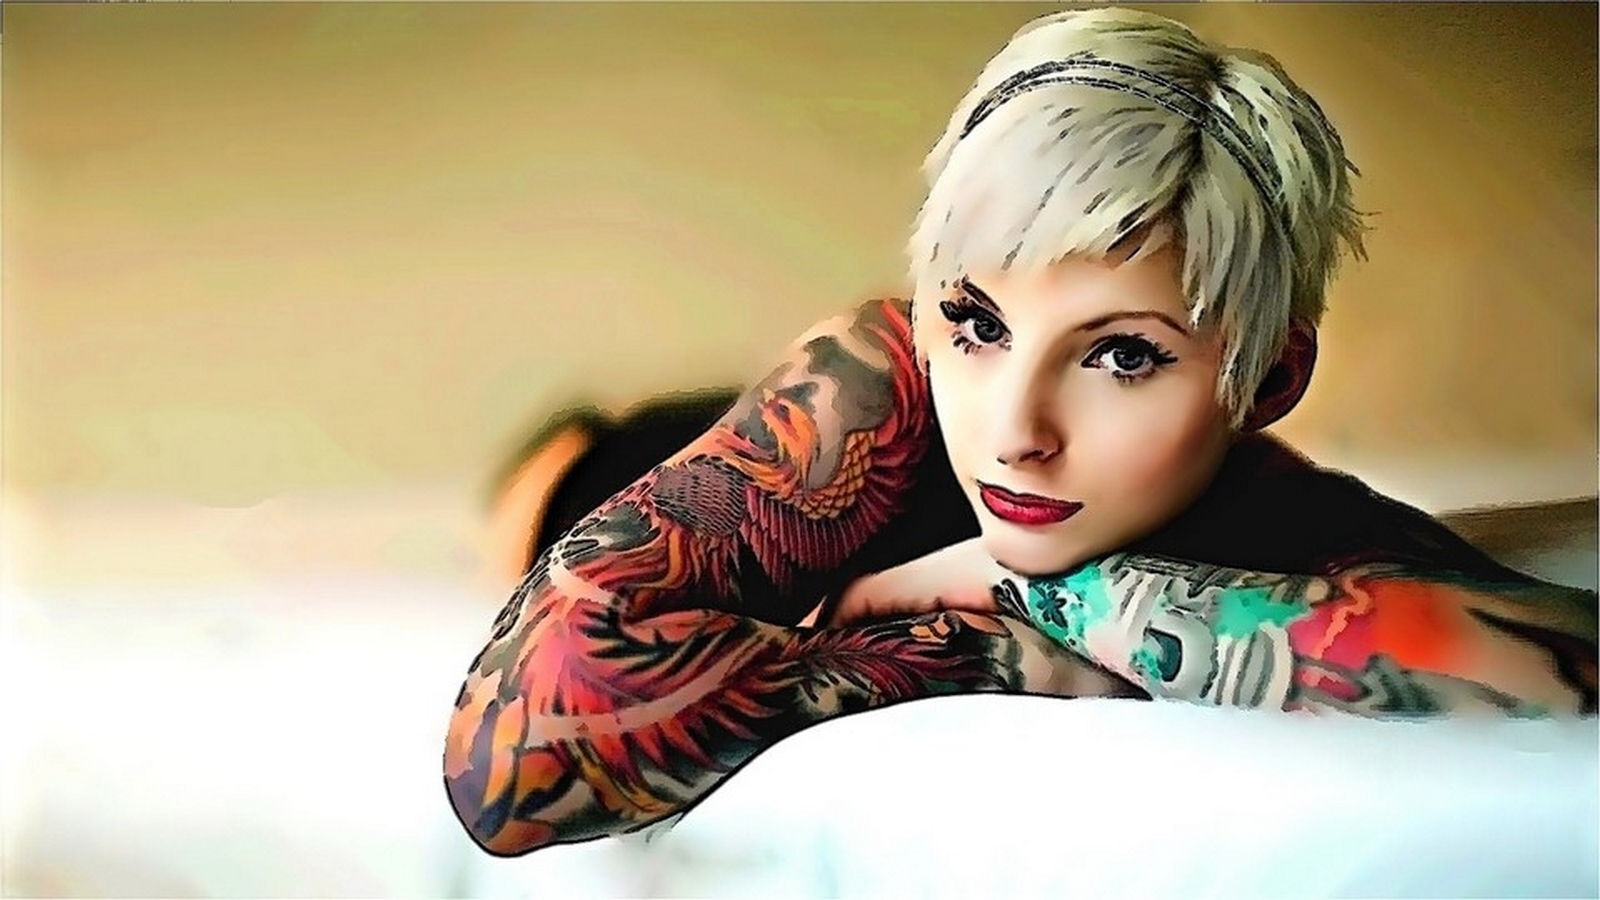 hot tattoo girl wallpaper,tattoo,beauty,arm,blond,photography